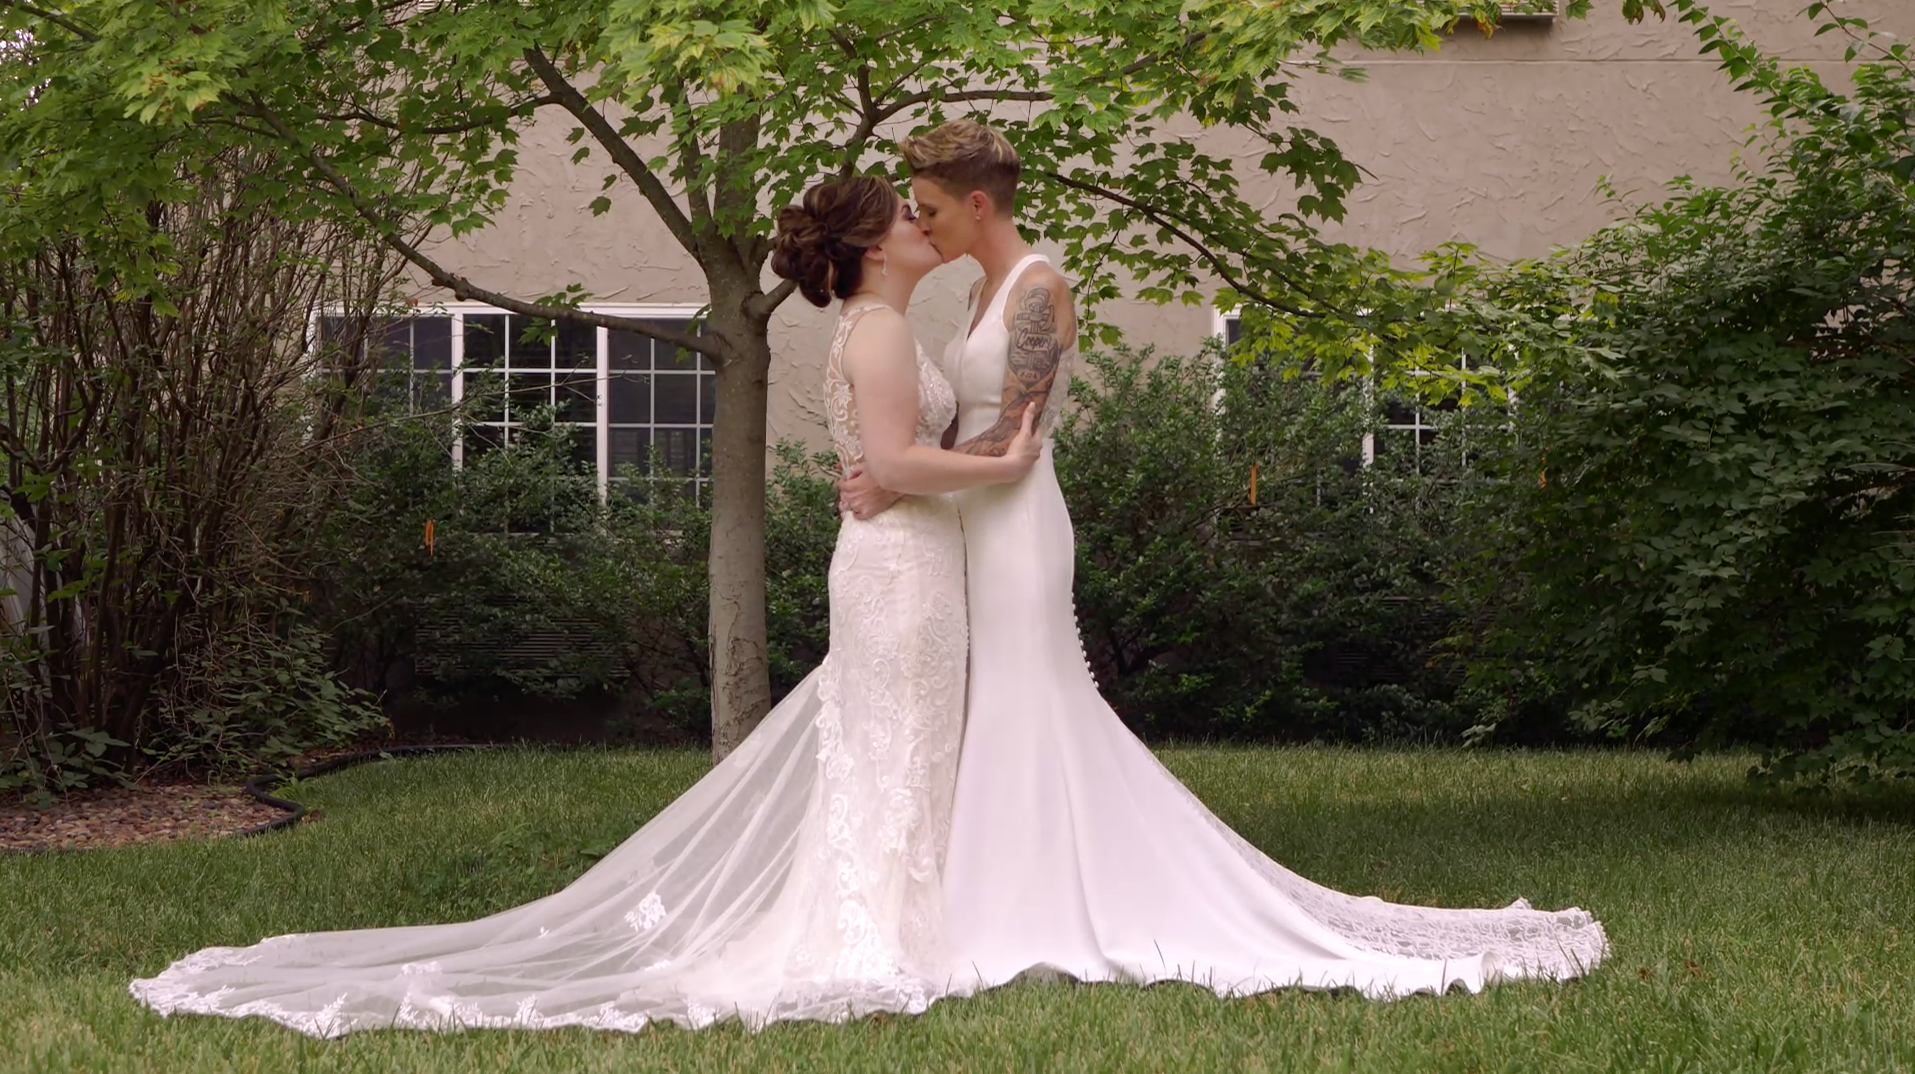 lesbian women kissing before their wedding ceremony